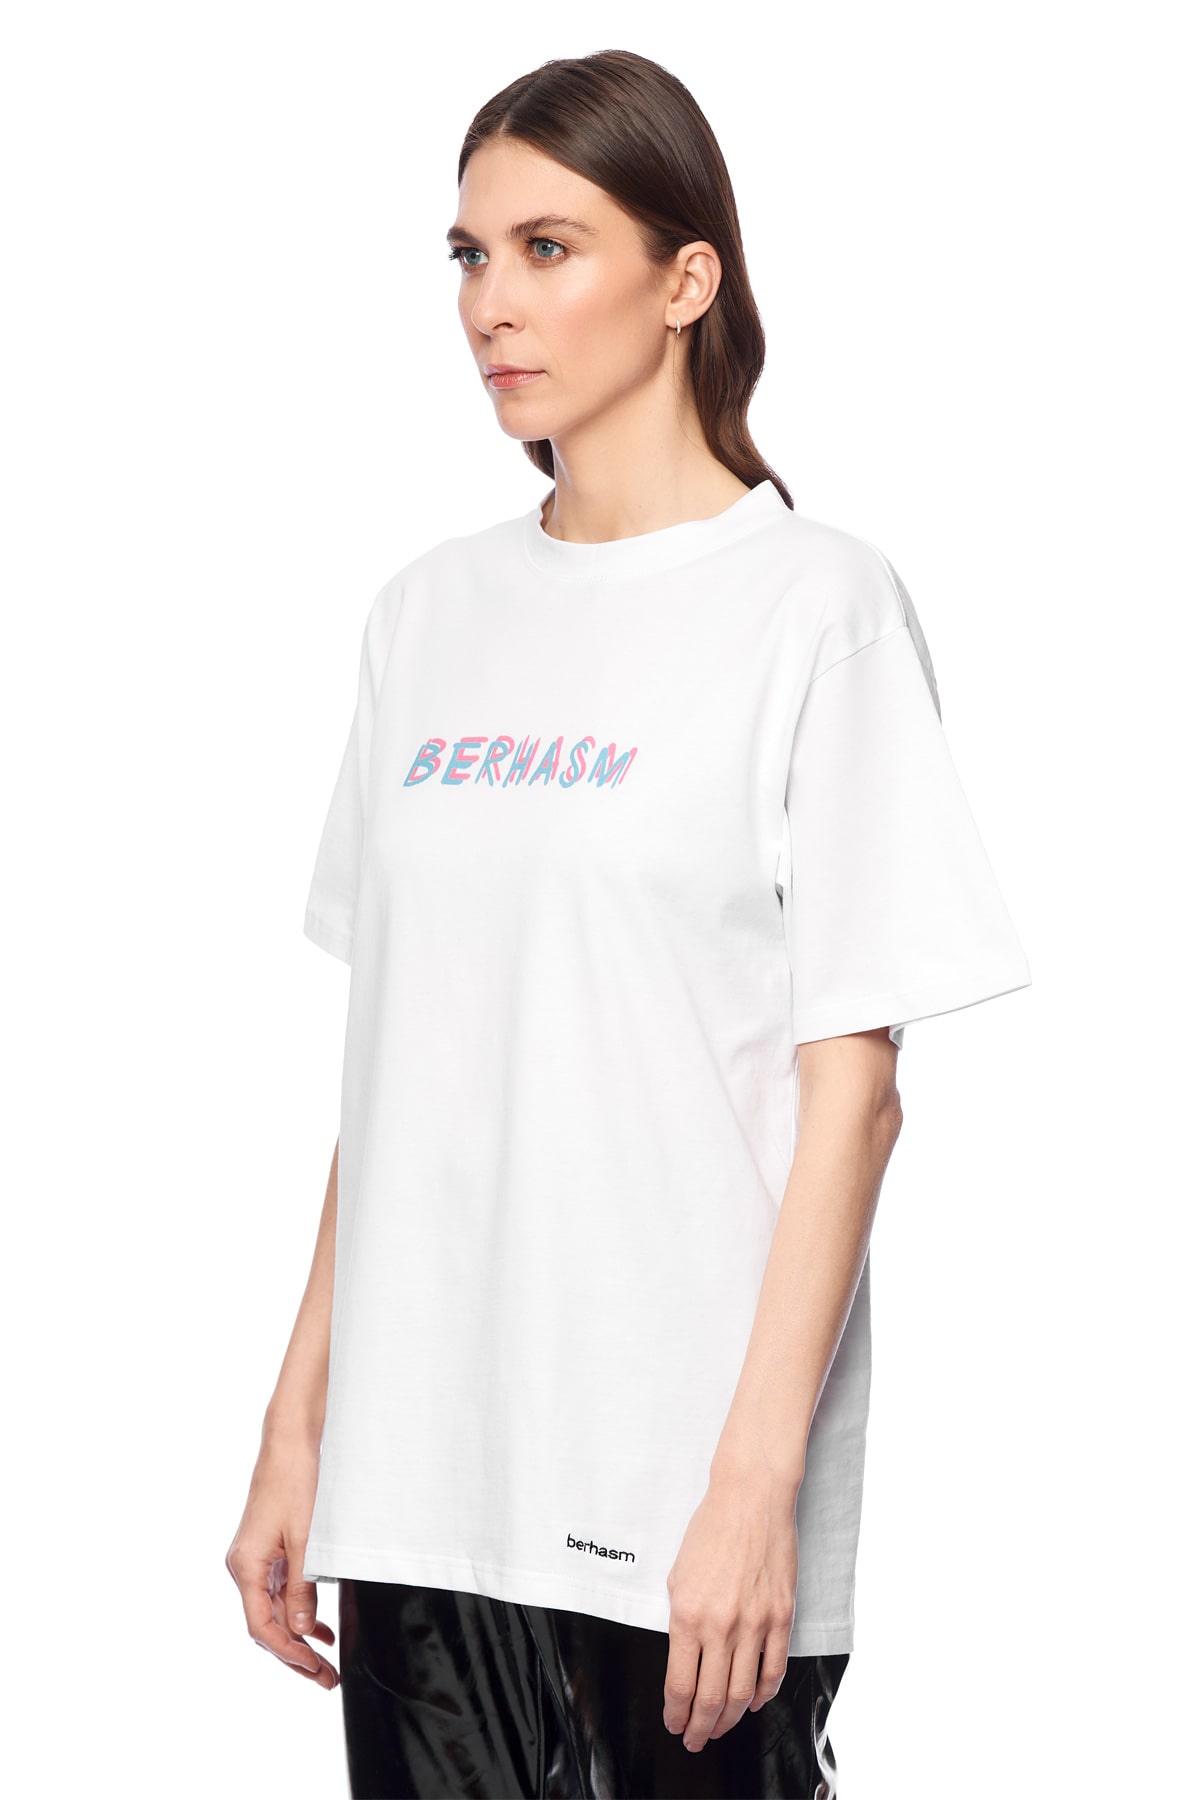 Berhasm Marshmello T-shirt